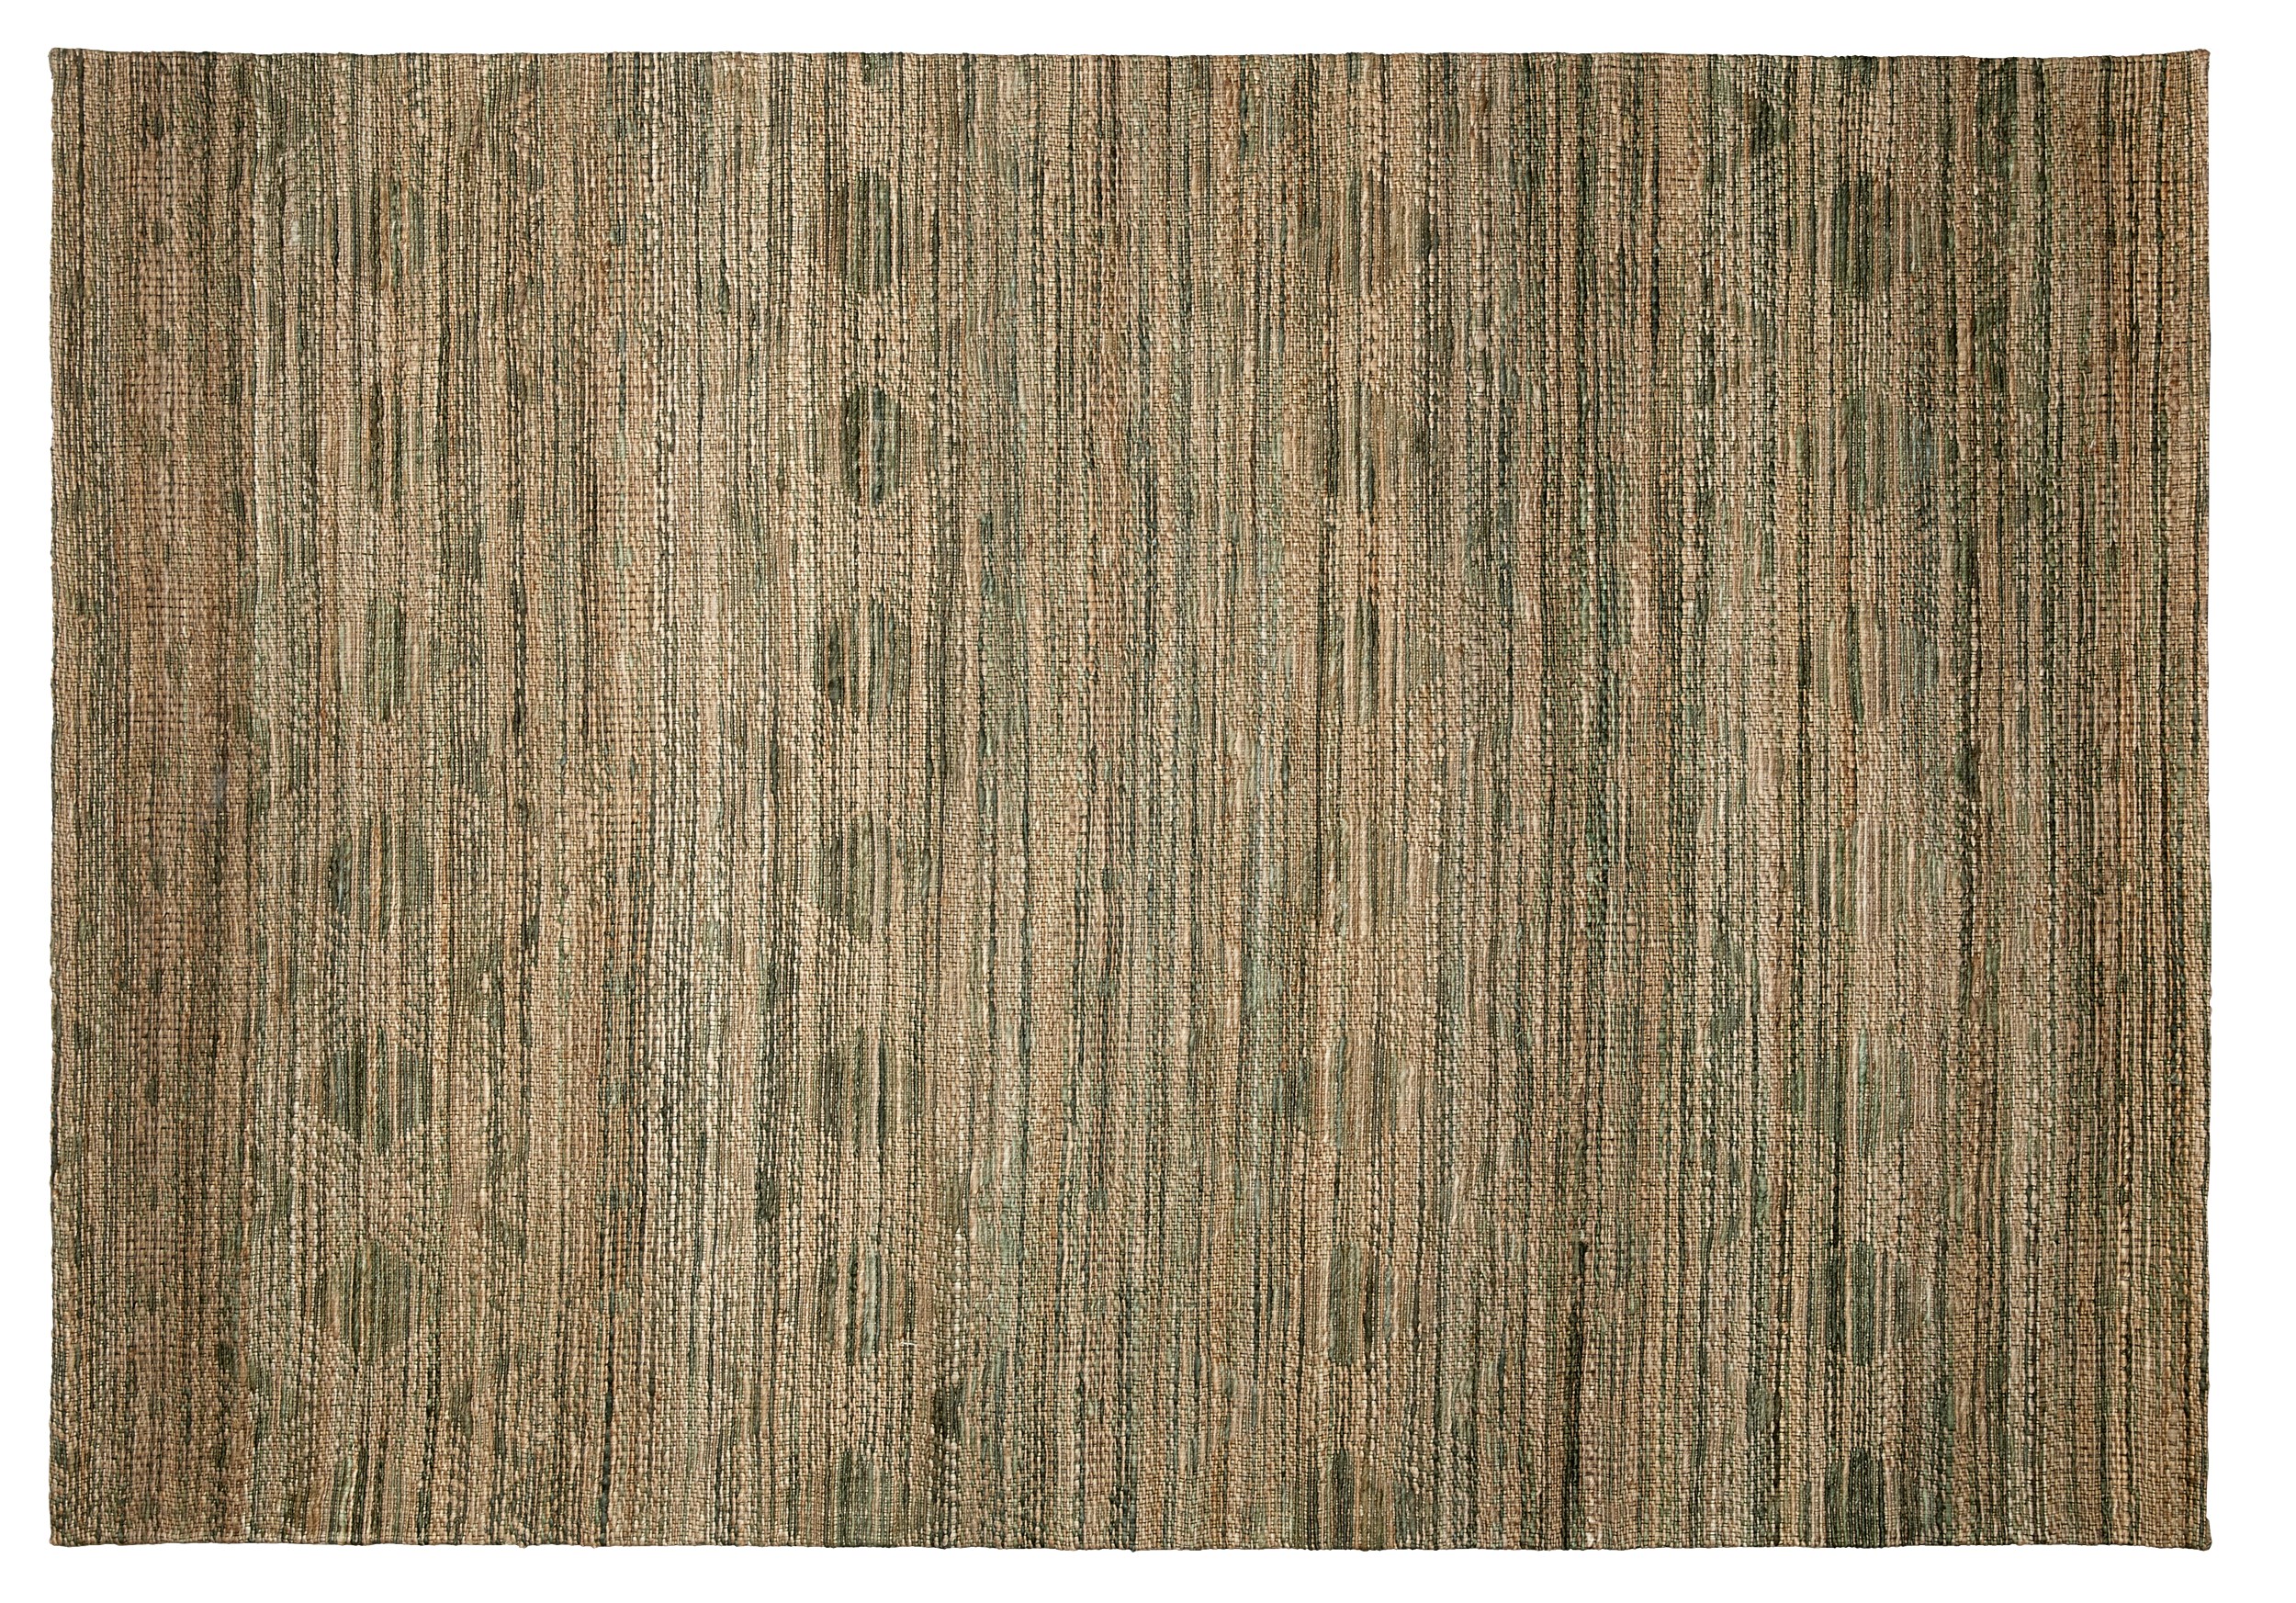 Larren Natur tæppe 170 x 240 cm - Grøn/naturfarvet jute og rudemønster